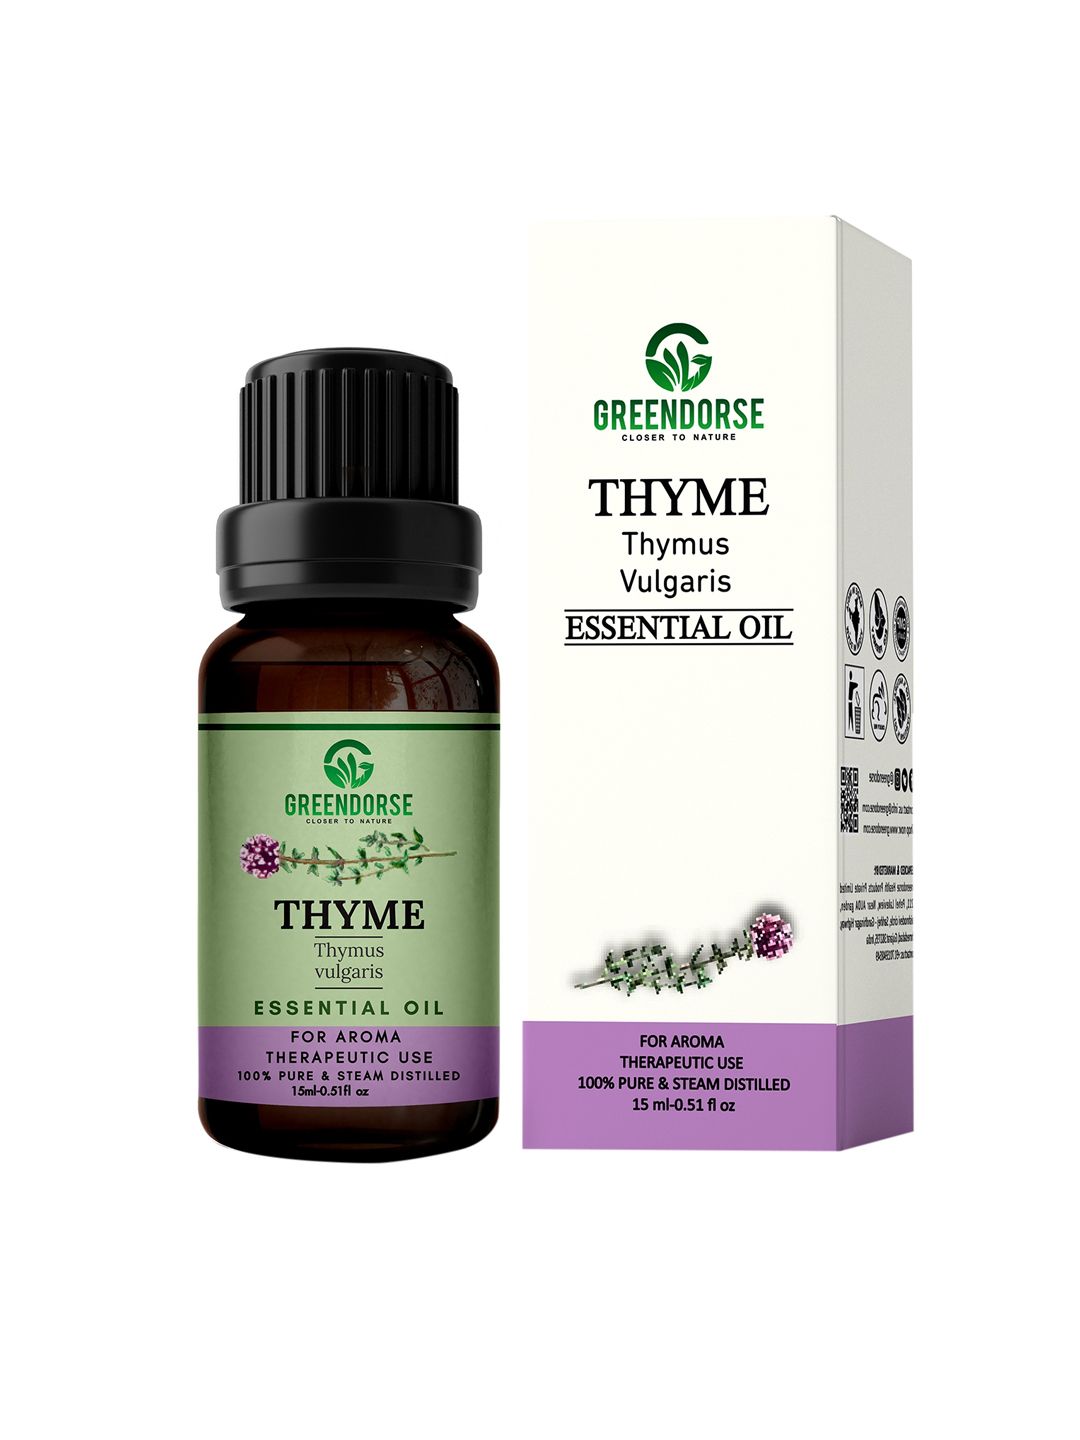 GREENDORSE Thyme 100% Pure & Steam Distilled Essential Oil - 15 ml Price in India